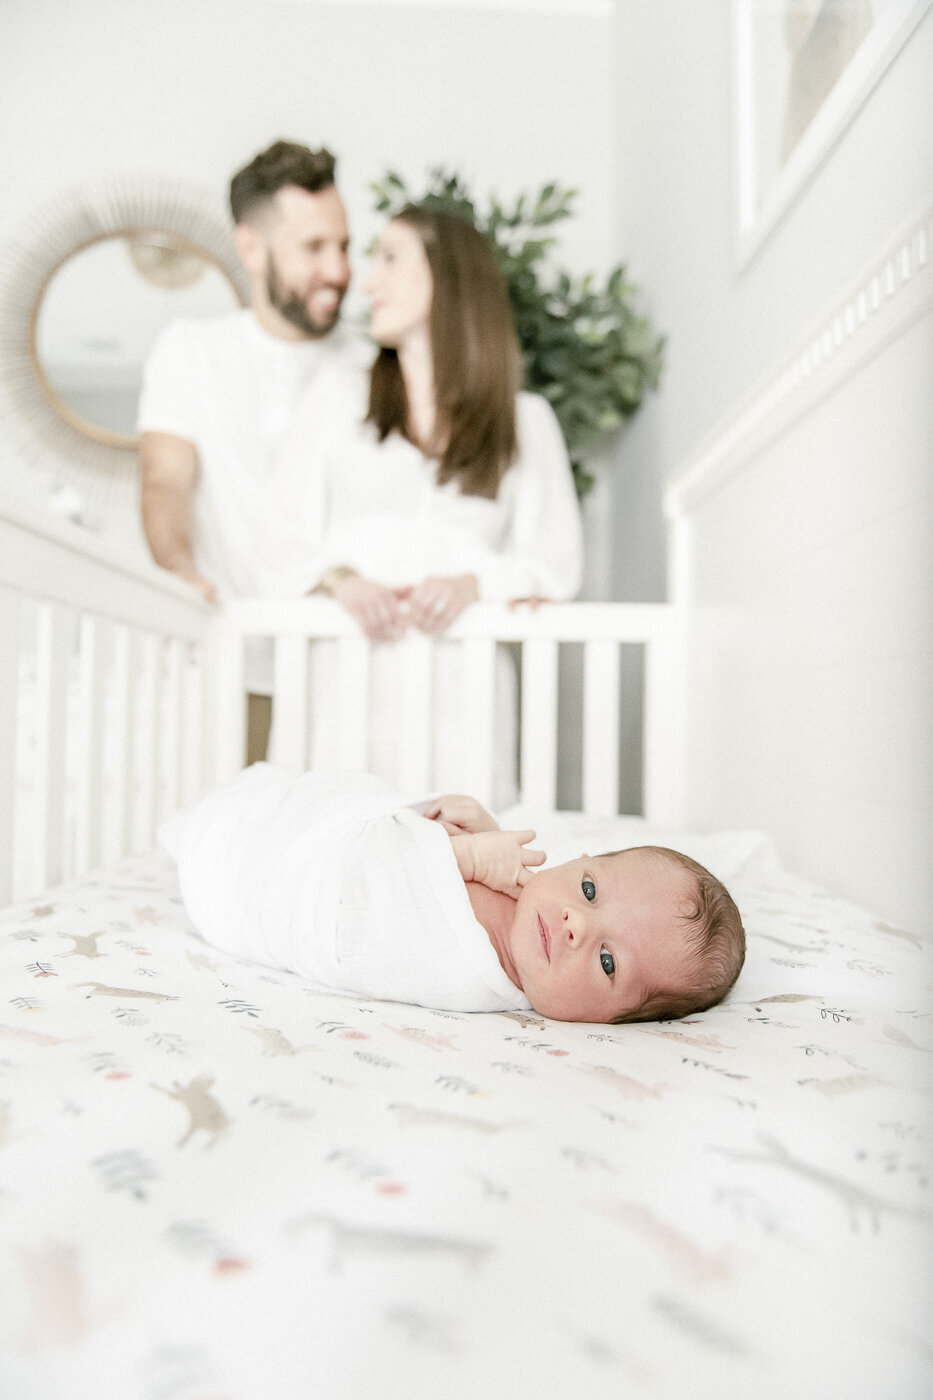 Newborn Photographer Nashville | In home session